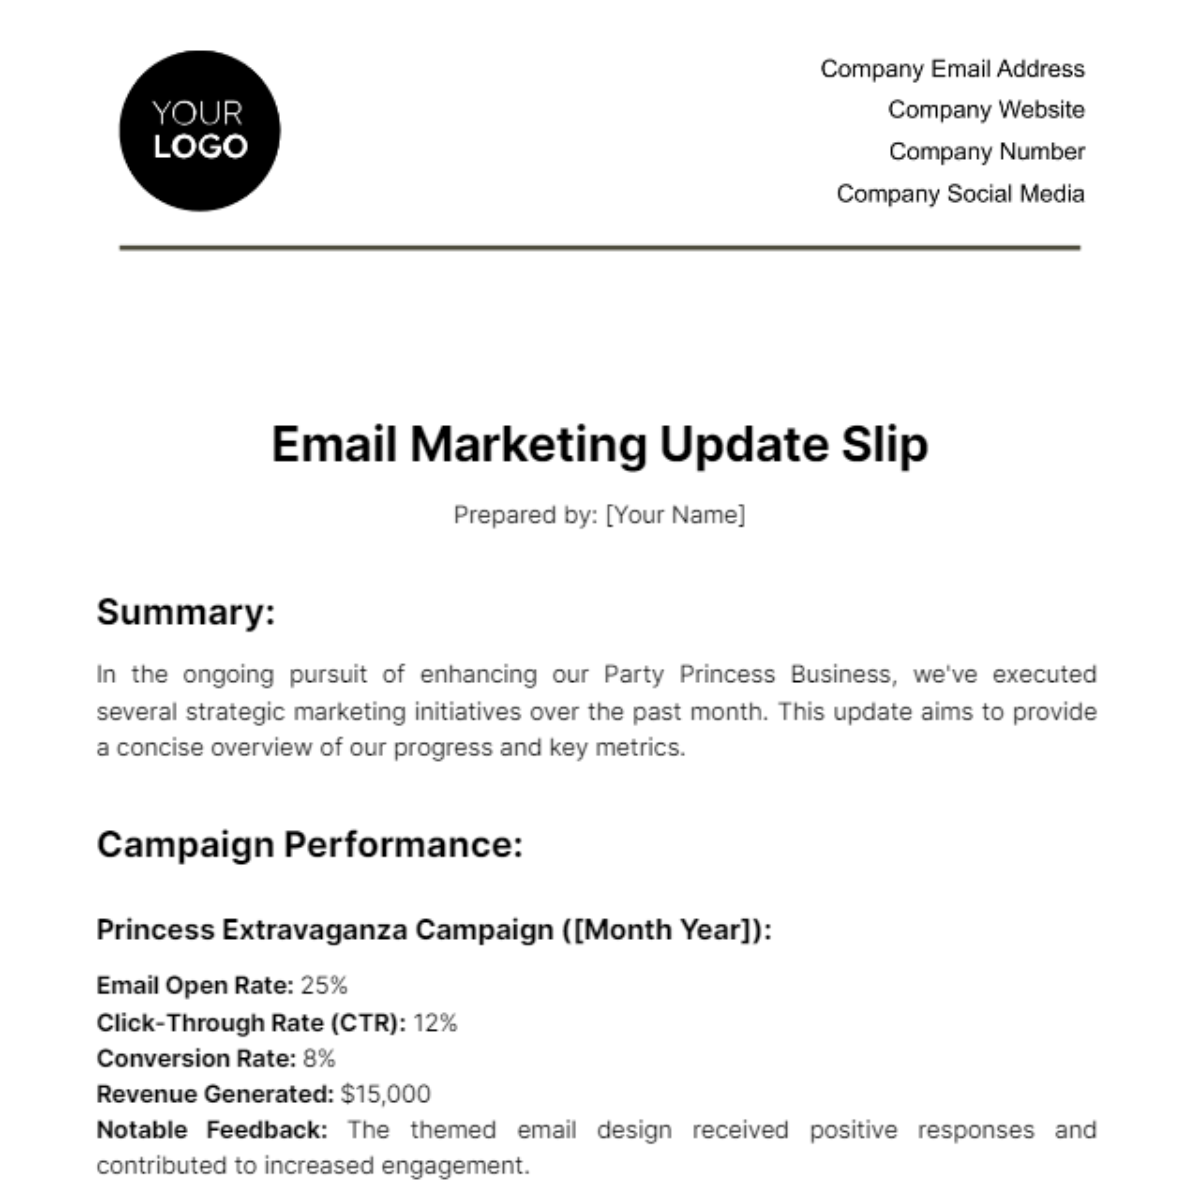 Email Marketing Update Slip Template